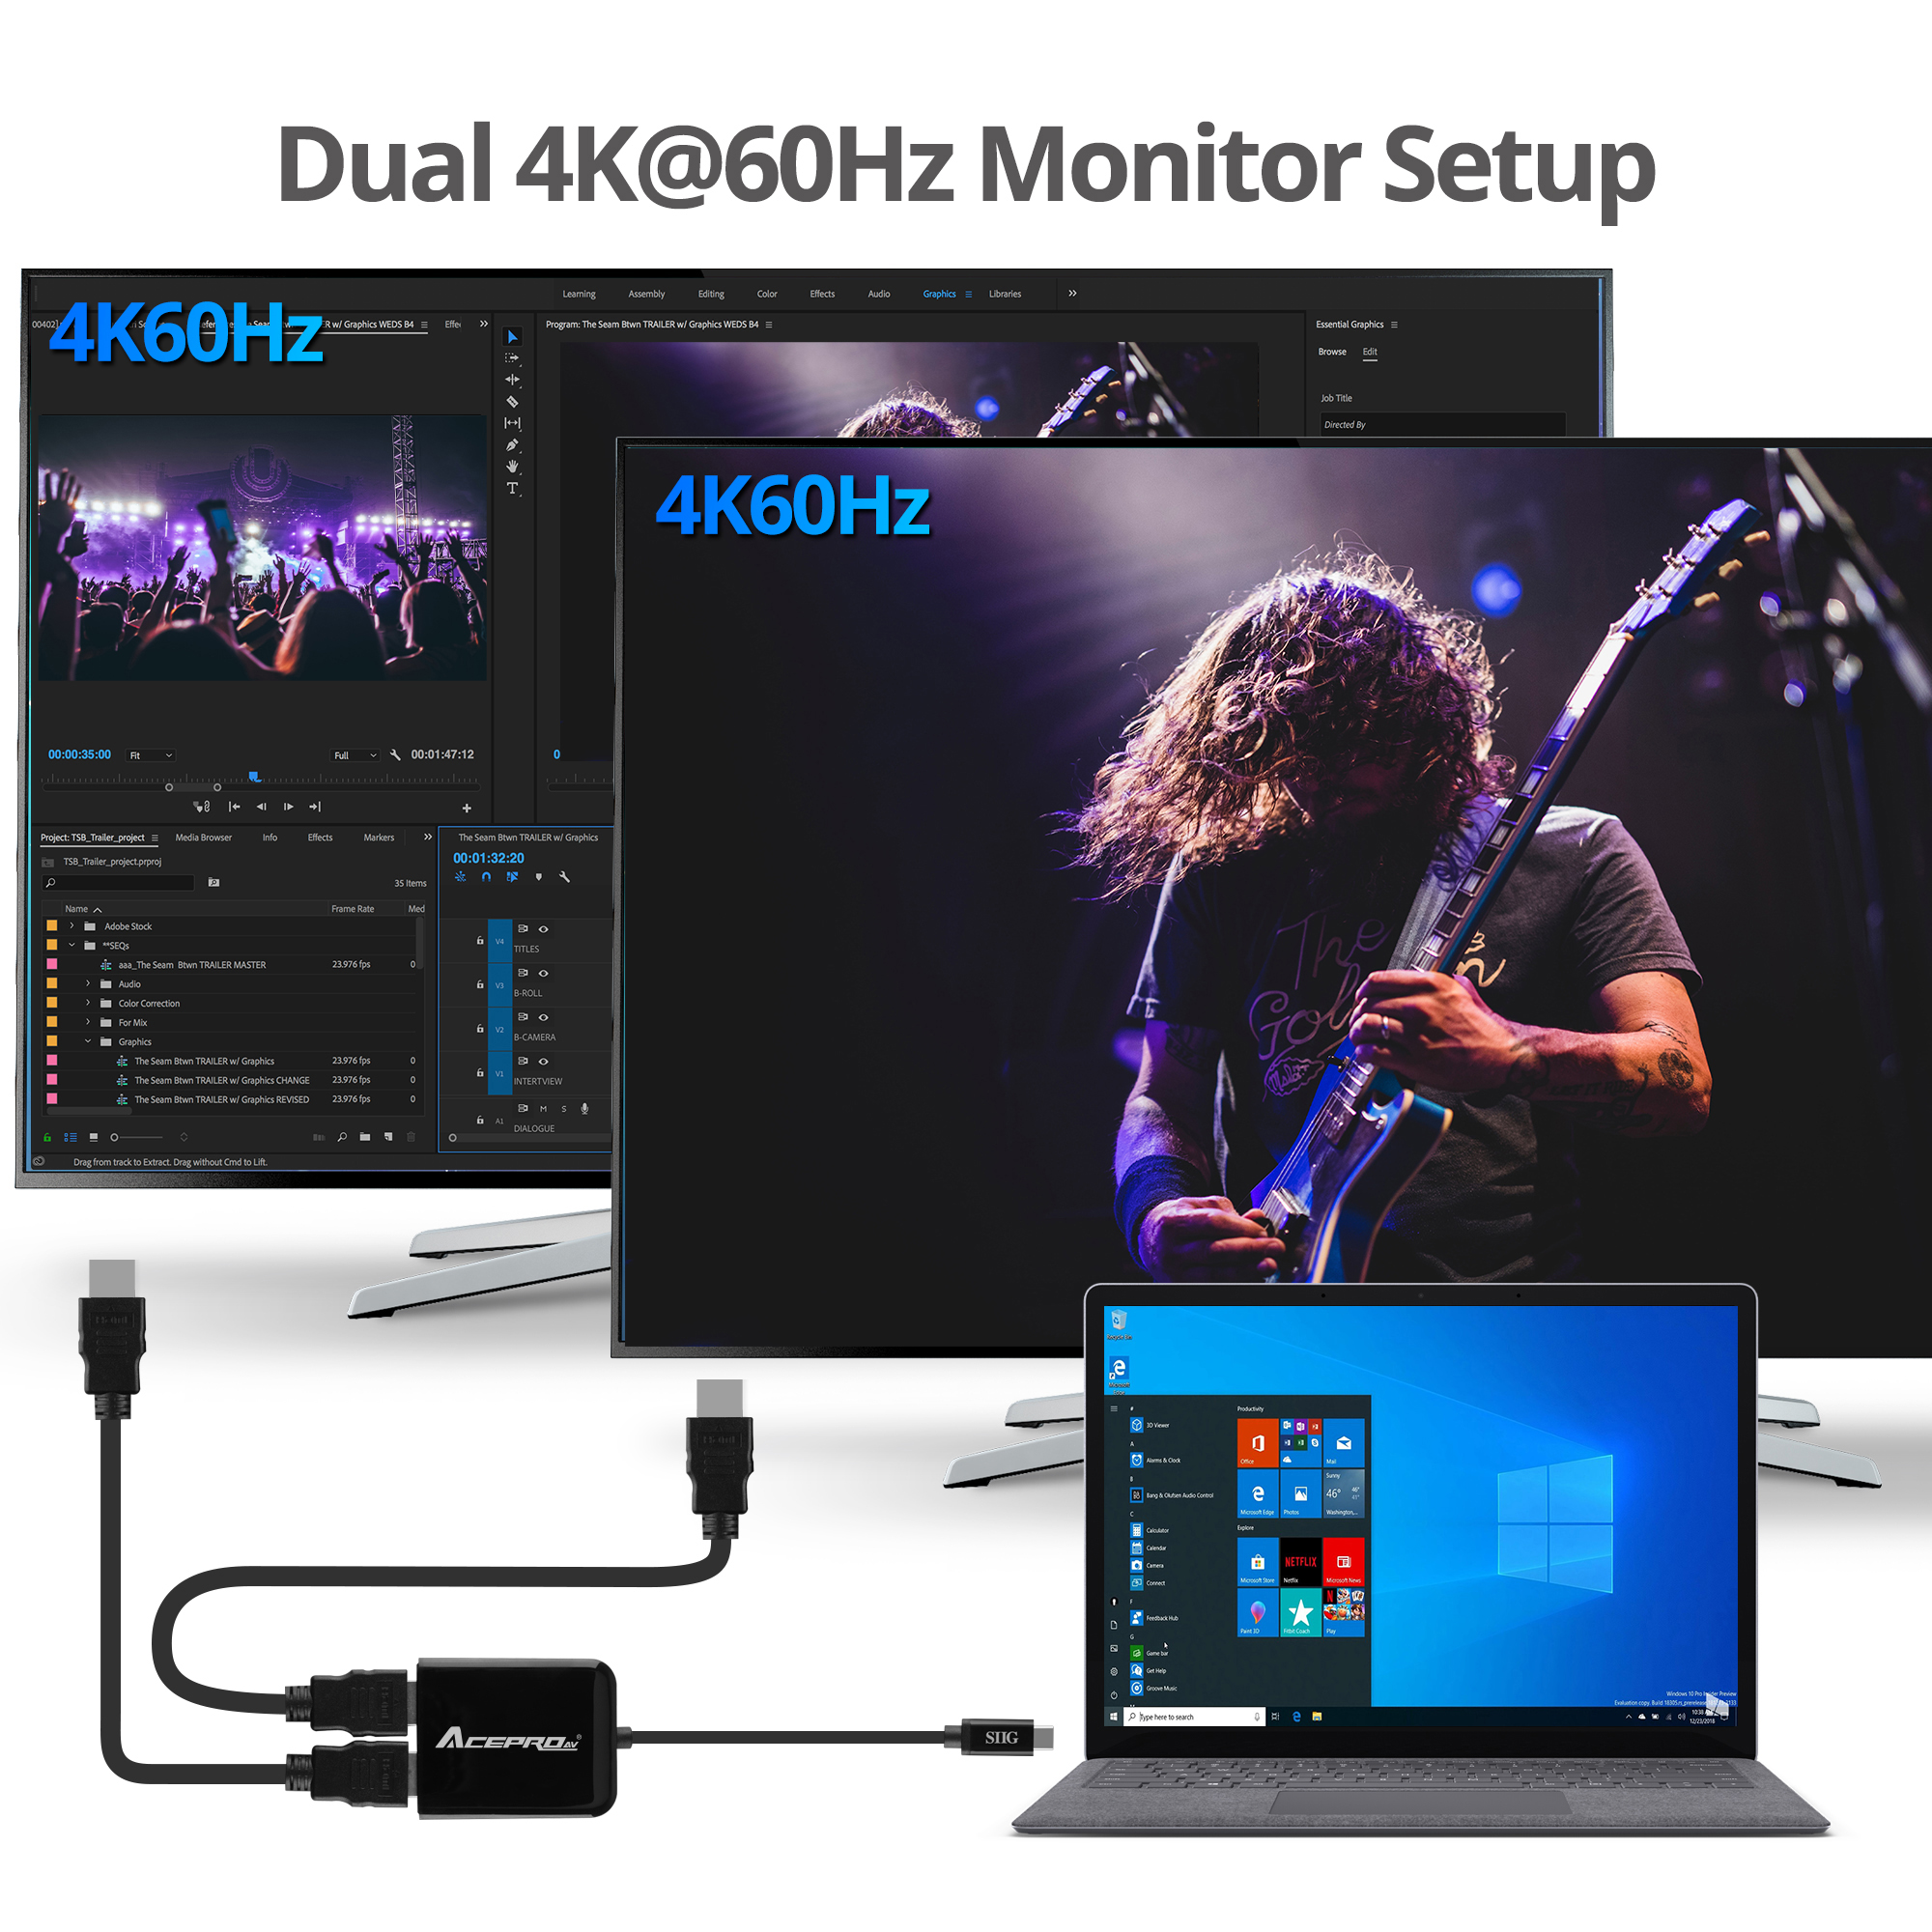 USB-C MST 2-Port HDMI Hub 4K 60Hz (USBCMST2HD-4K60)